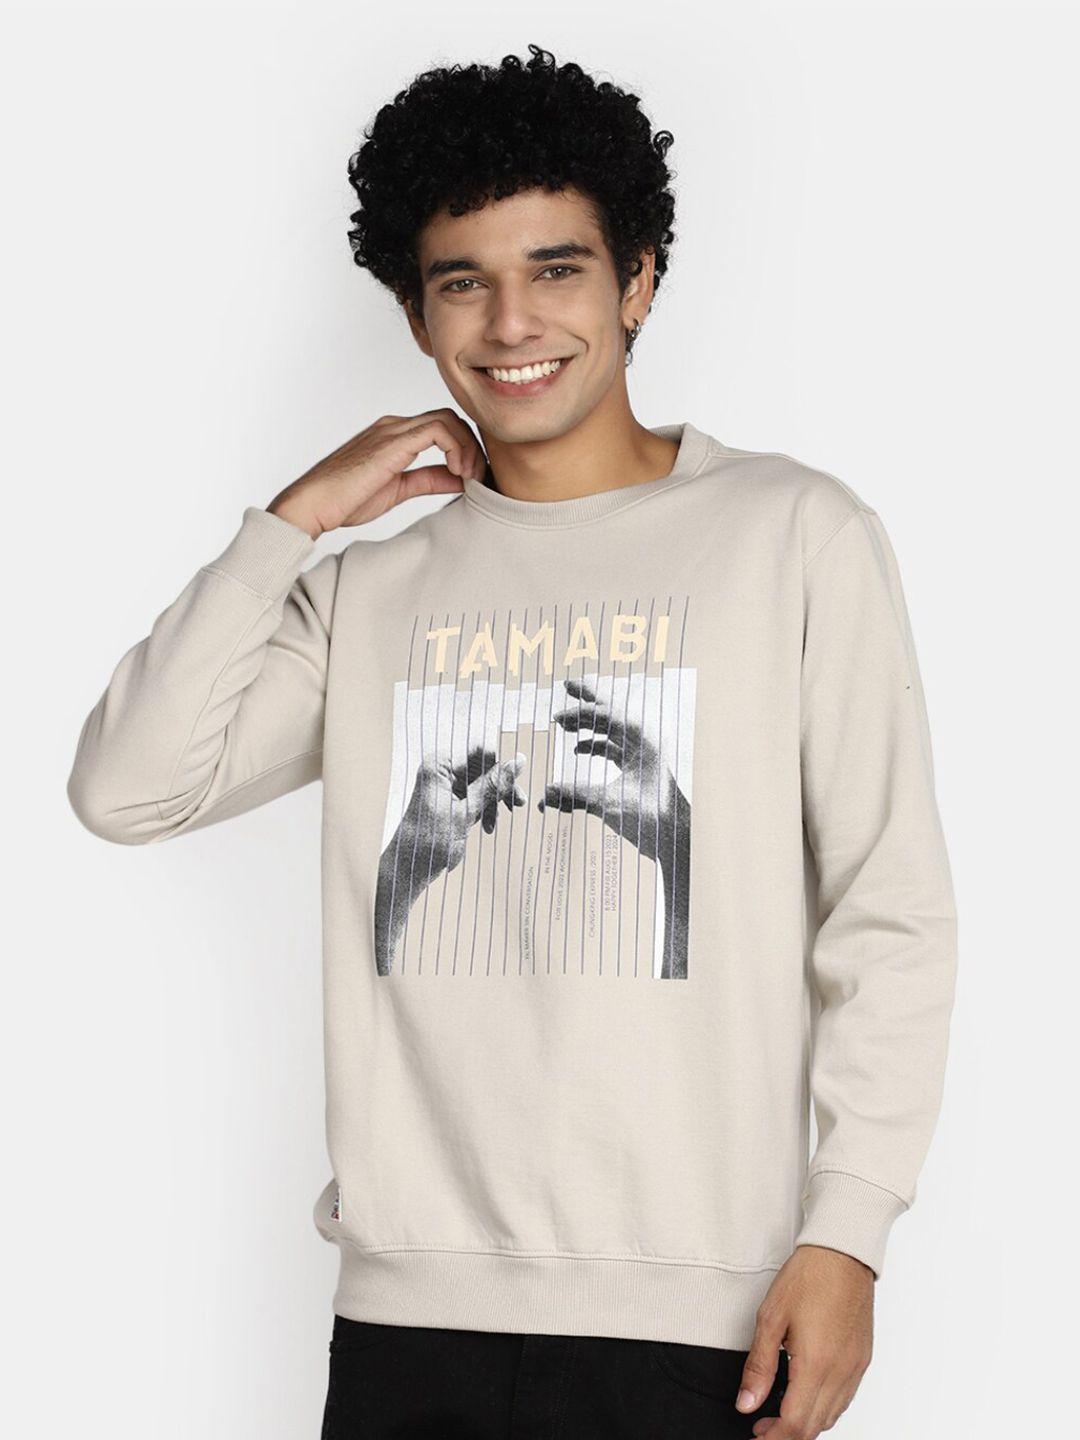 v-mart graphic printed cotton sweatshirt